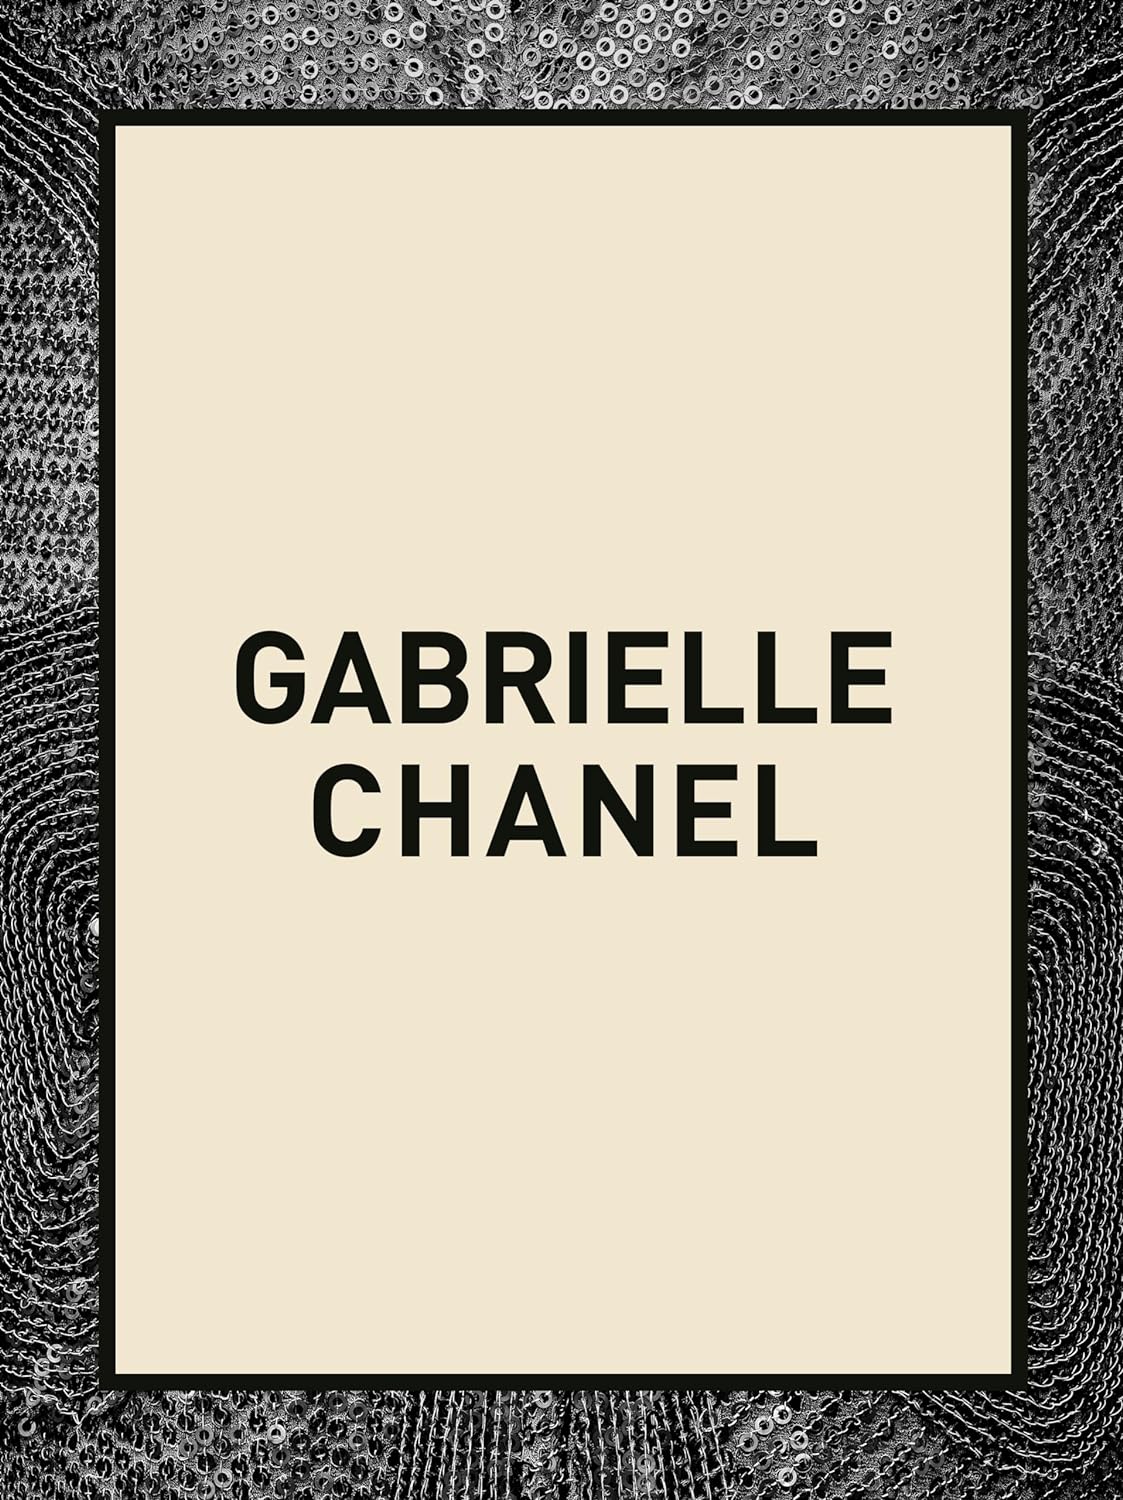 Gabrielle Chanel. 60 Years of Fashion